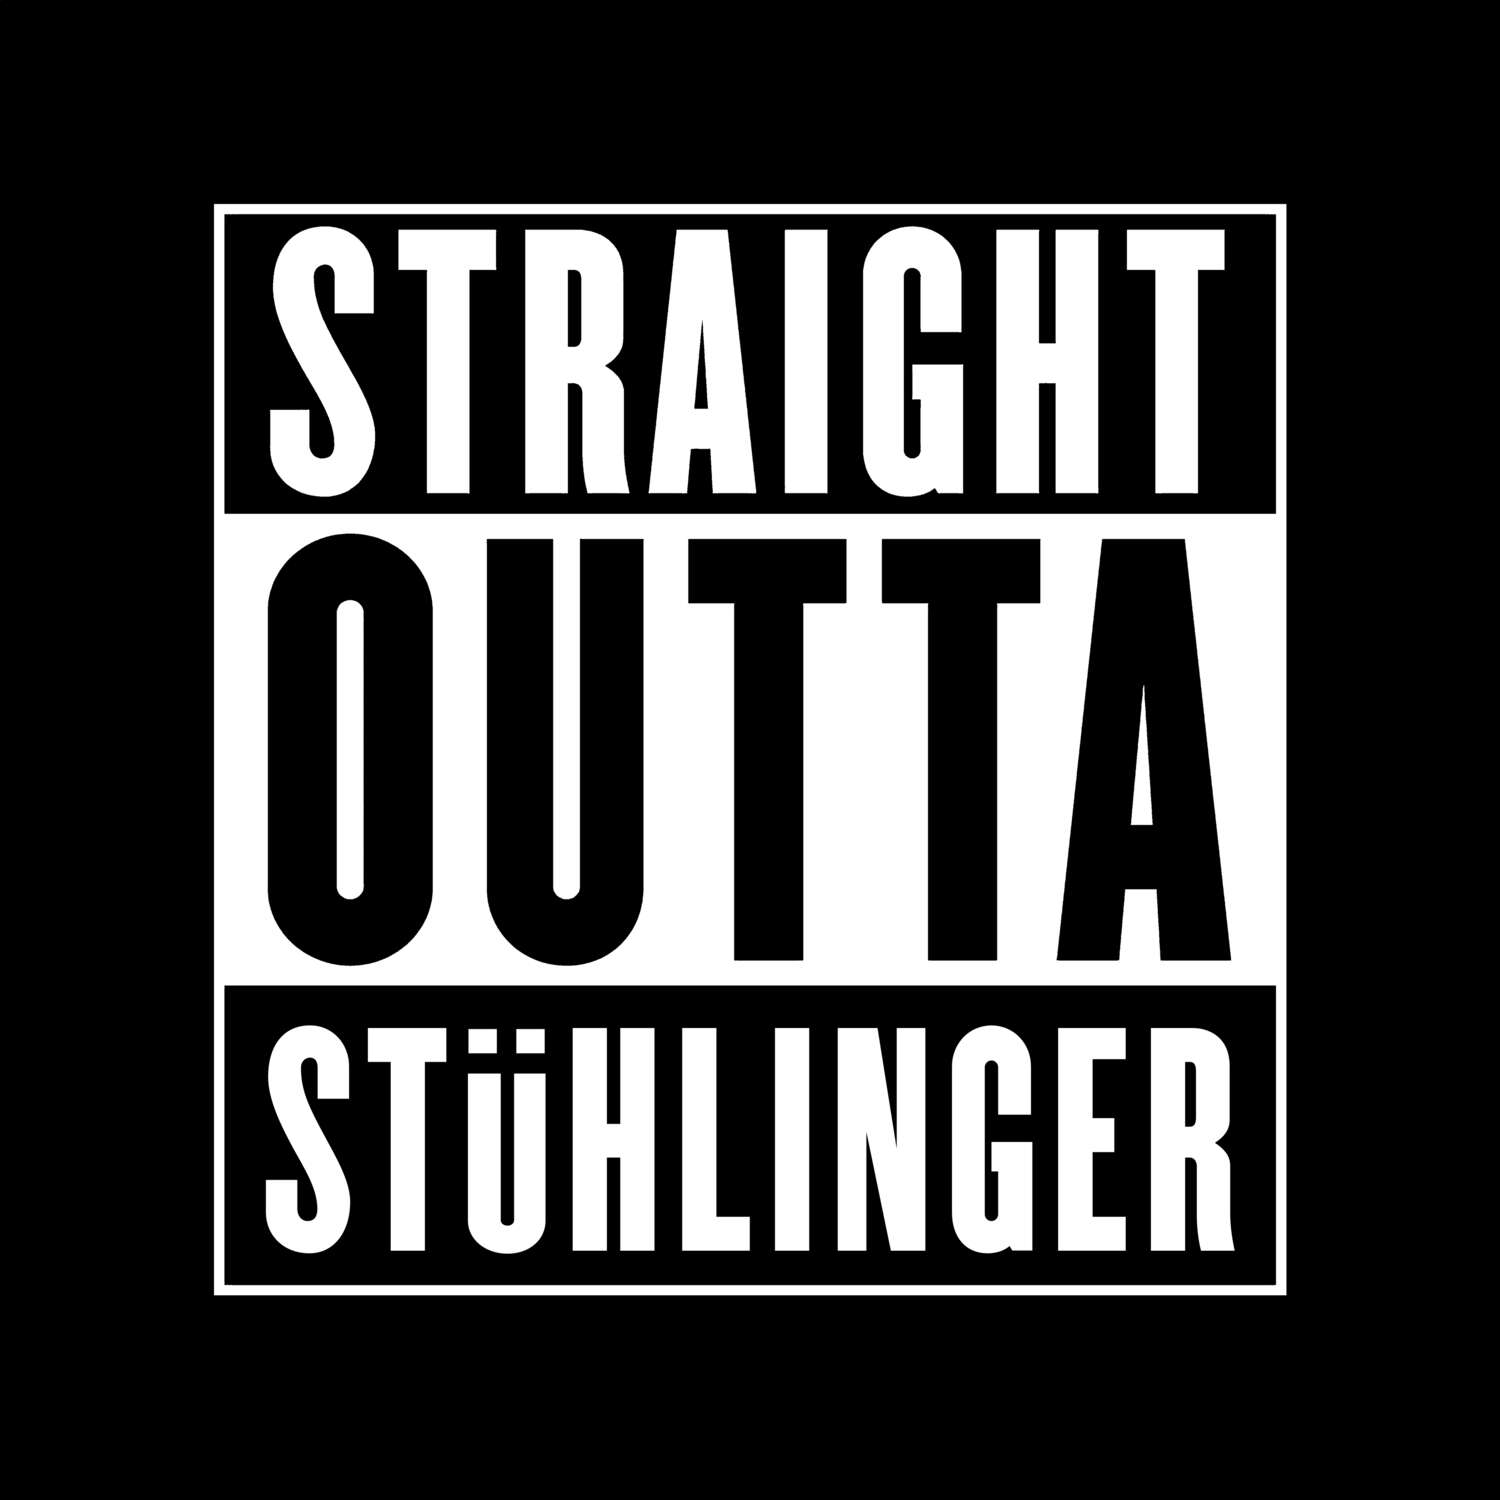 Stühlinger T-Shirt »Straight Outta«